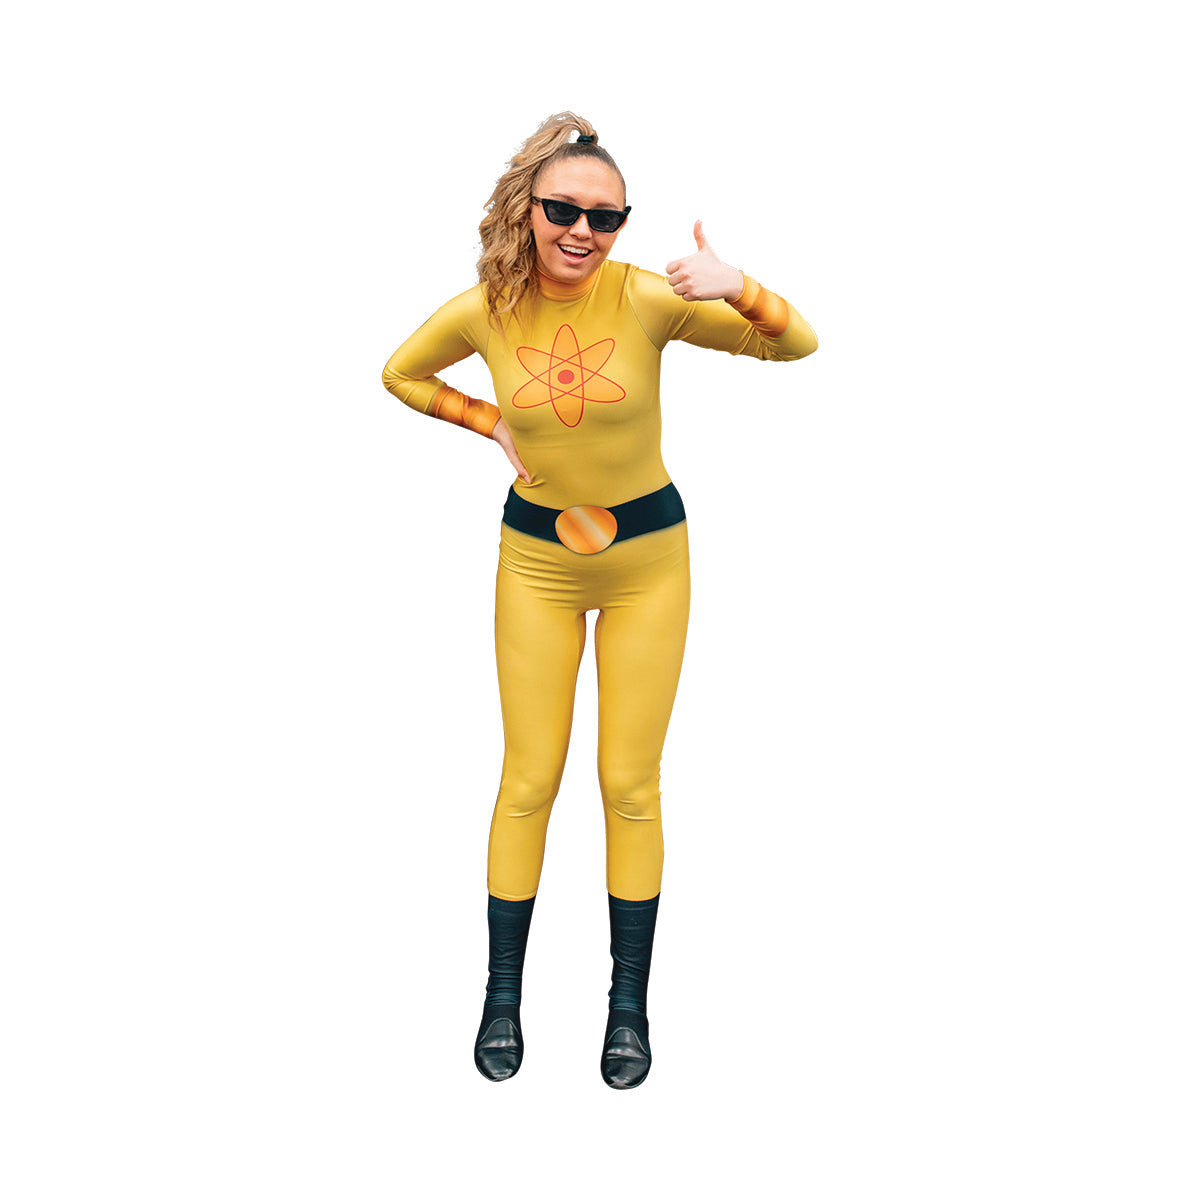 Powerline costume bodysuit